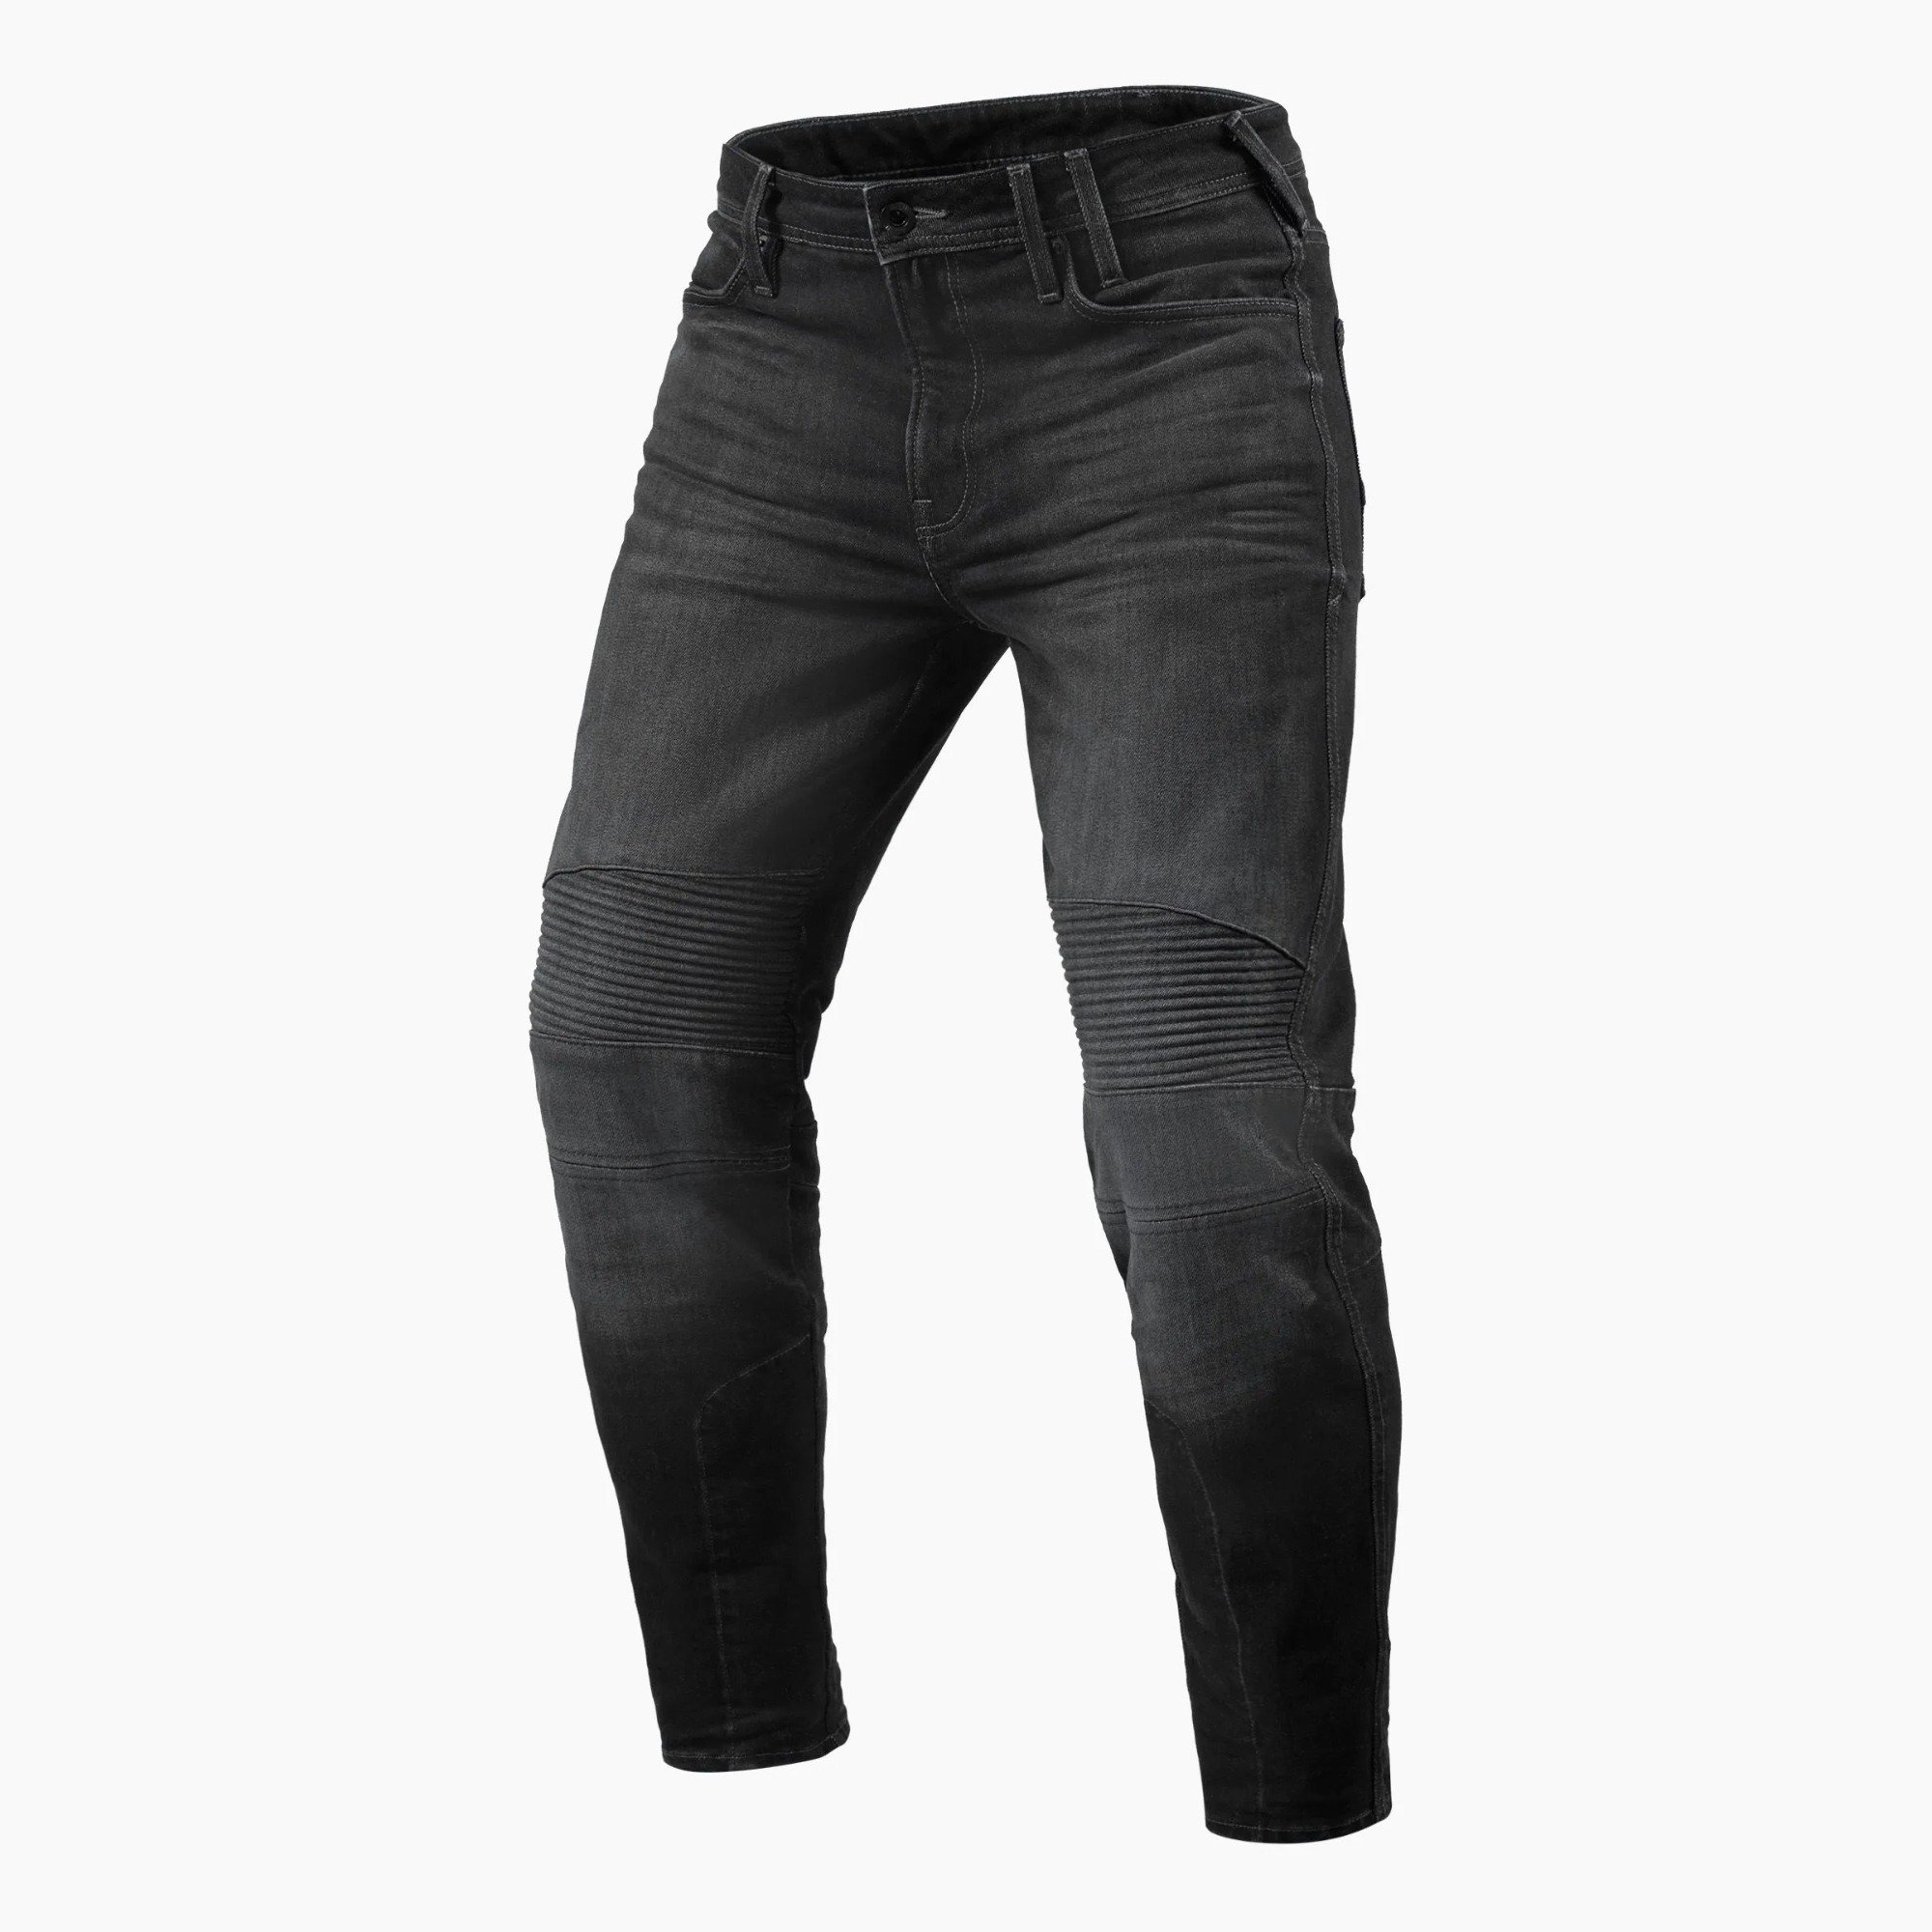 Image of REV'IT! Jeans Moto 2 TF Dark Grey Used Motorcycle Jeans Talla L36/W31